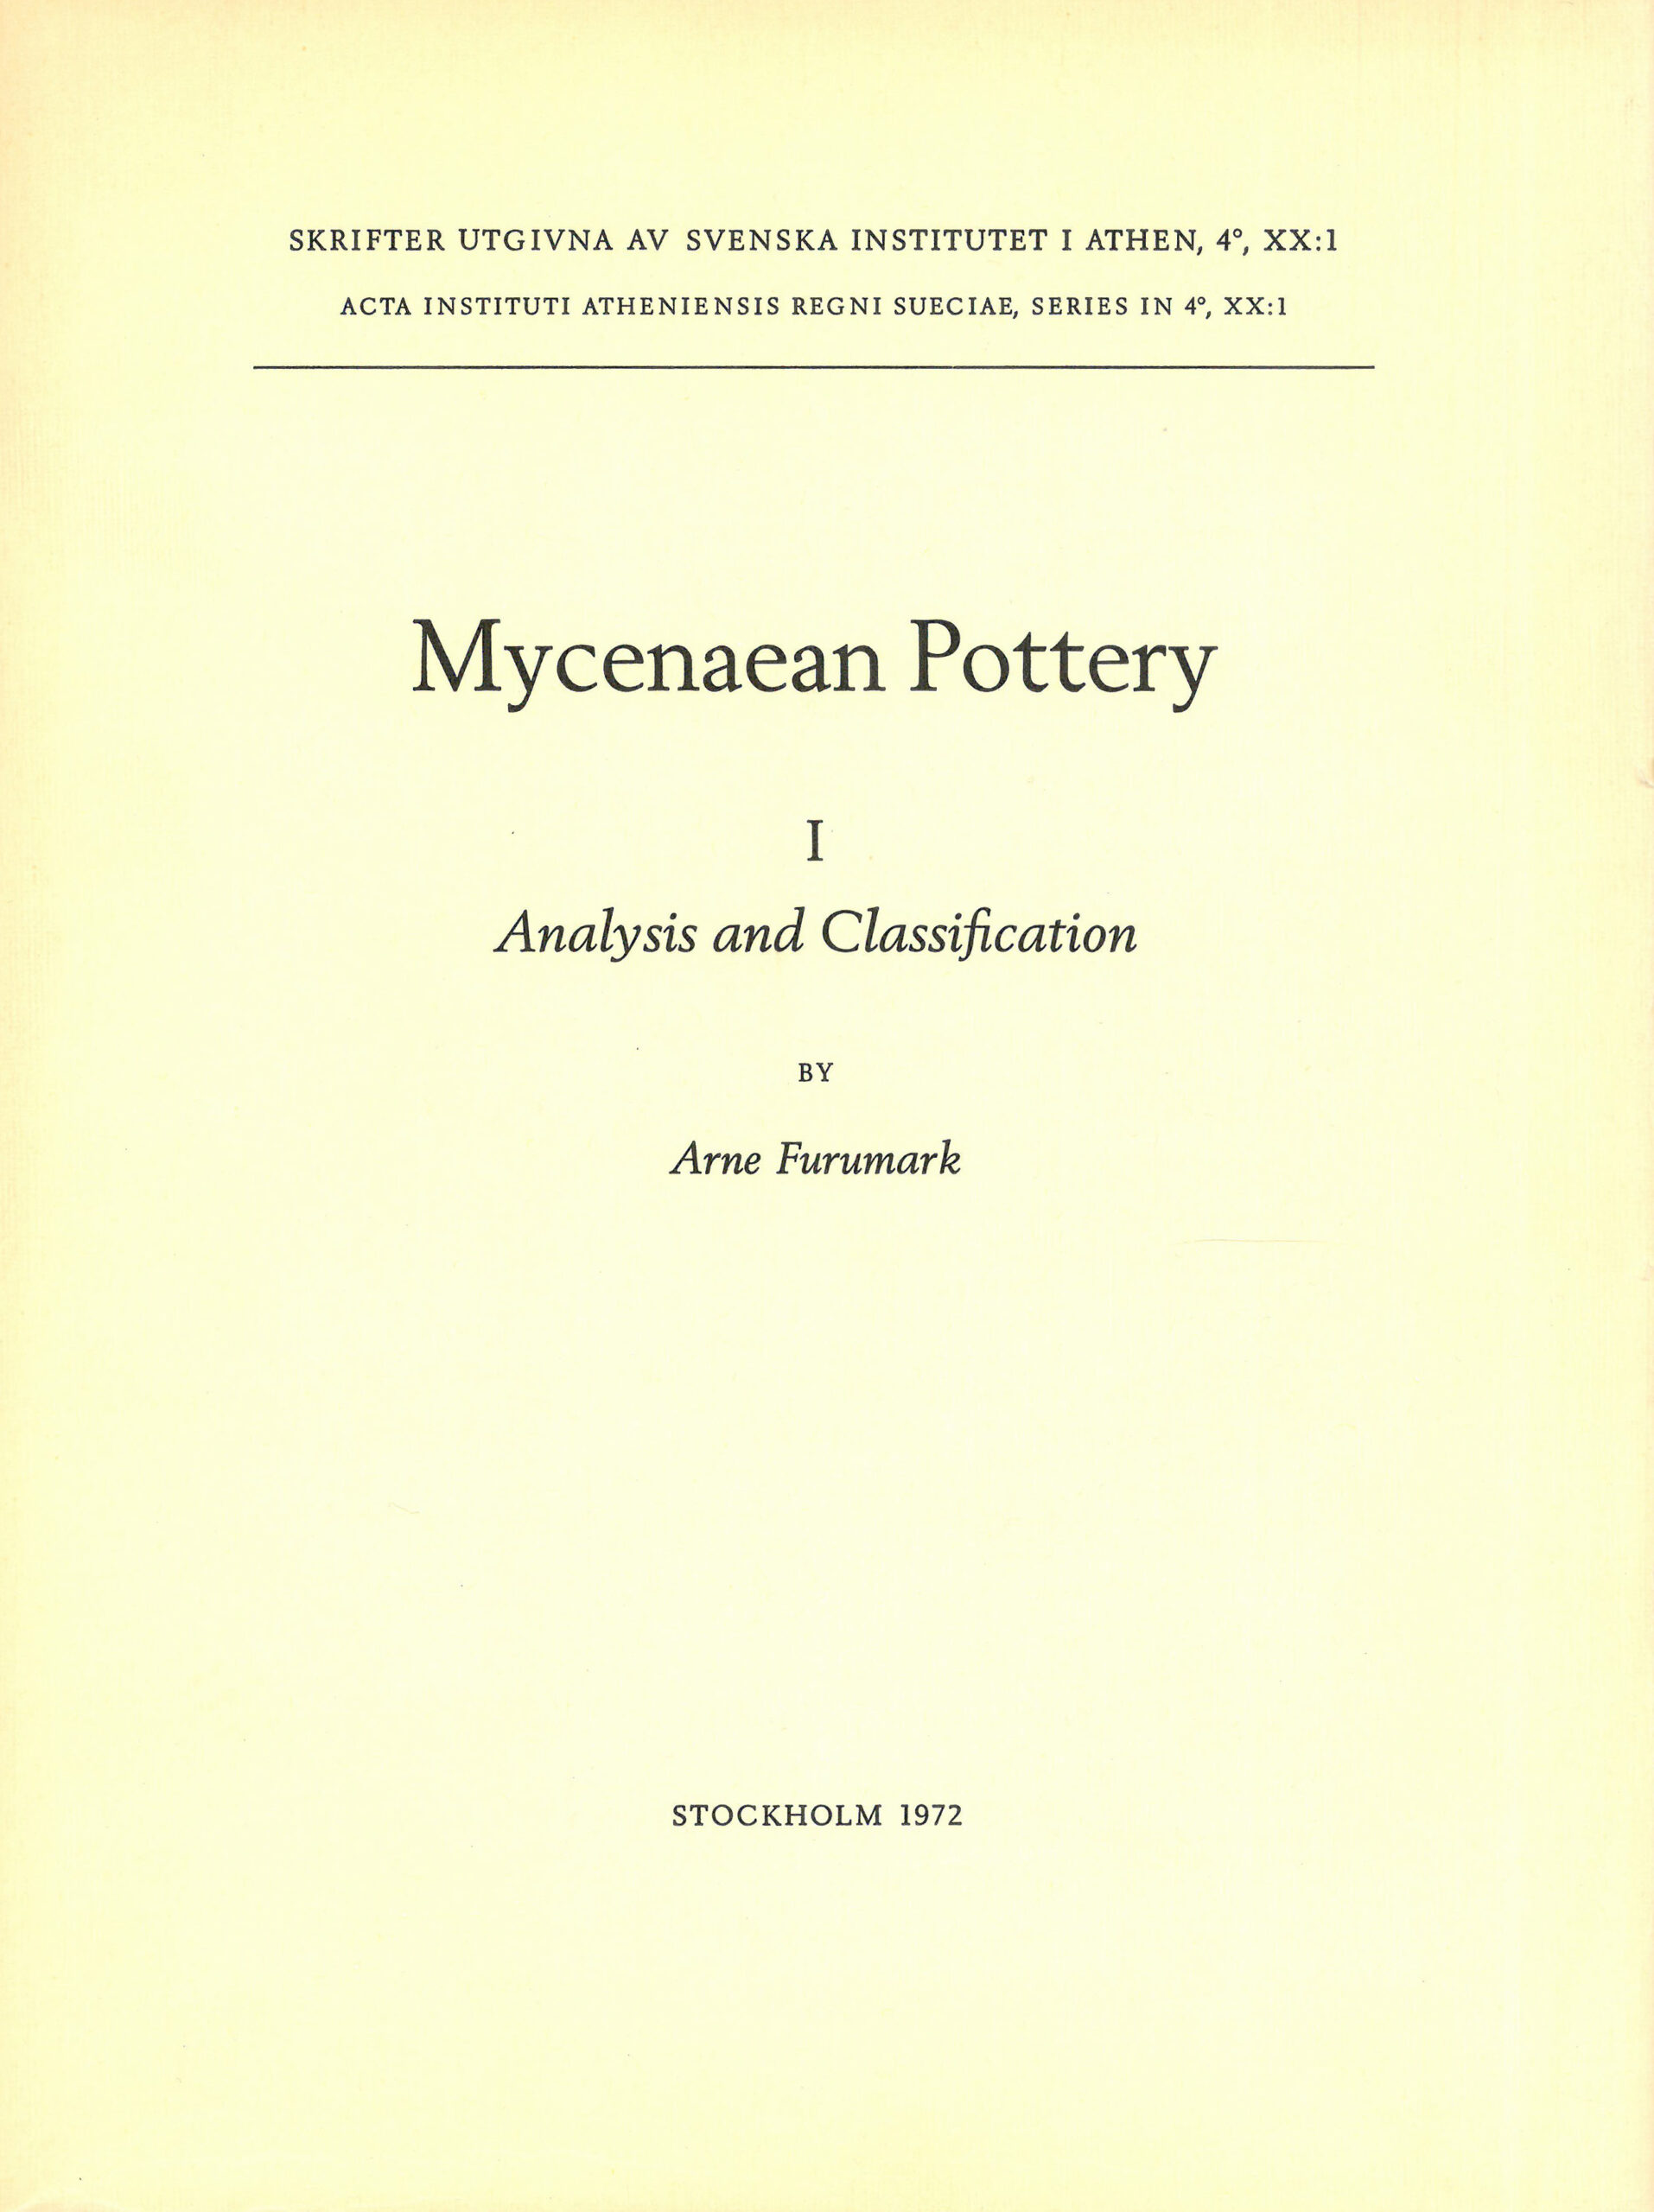 Arne Furumark, Mycenaean pottery 1. Analysis and classification (Skrifter utgivna av Svenska Institutet i Athen, 4°, 20:1), Stockholm 1972. ISSN: 0586-0539. ISBN: 978-91-85086-04-7. Soft cover: 690 pages.